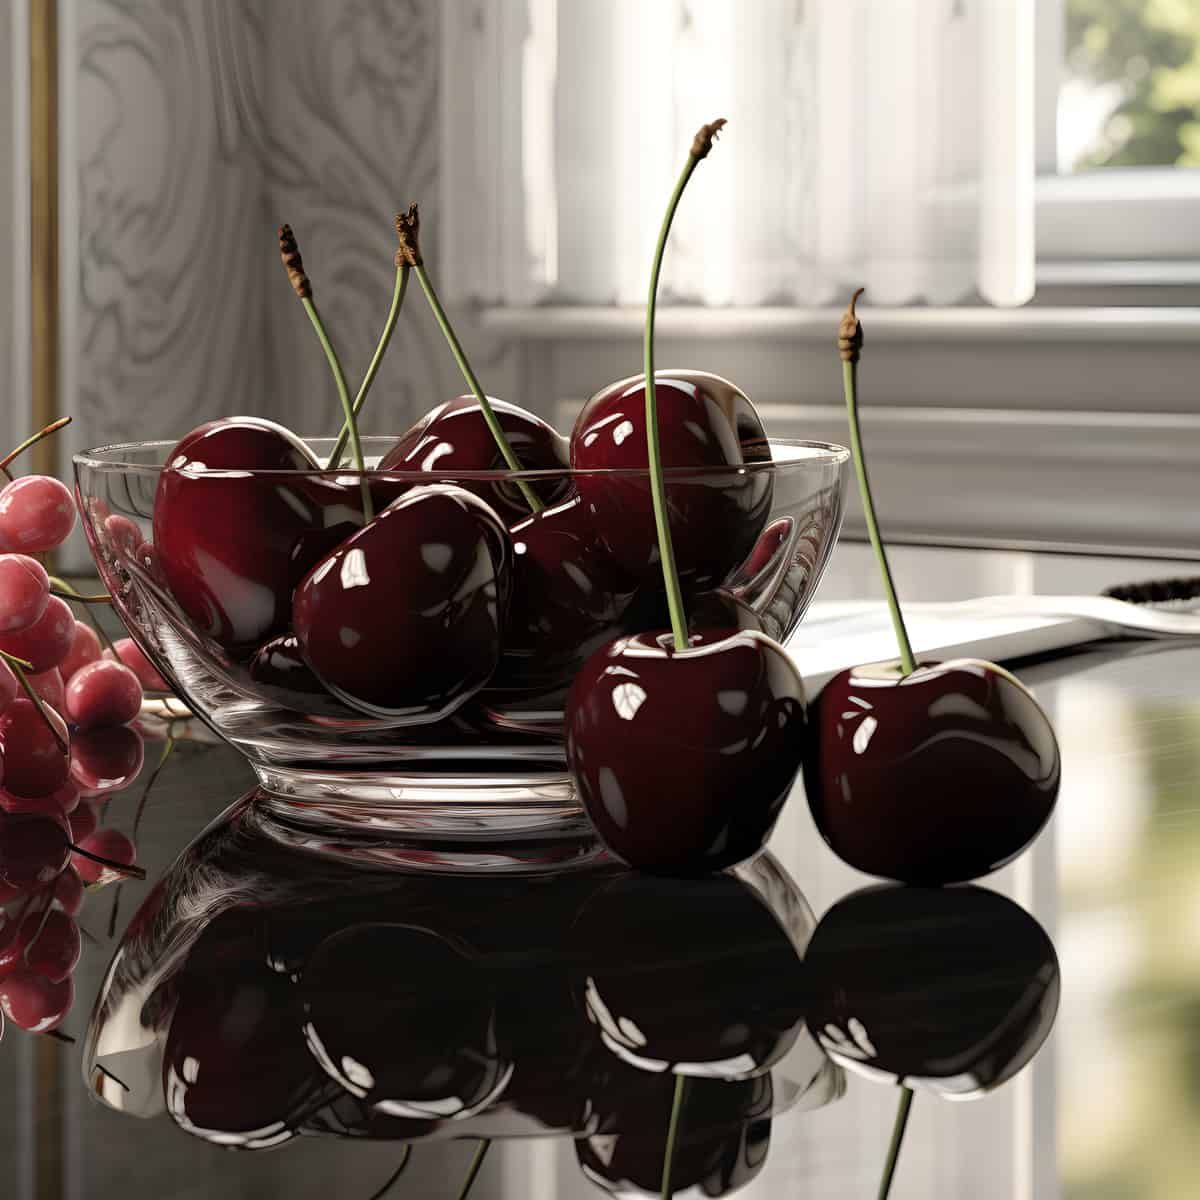 Black Cherries on a kitchen counter